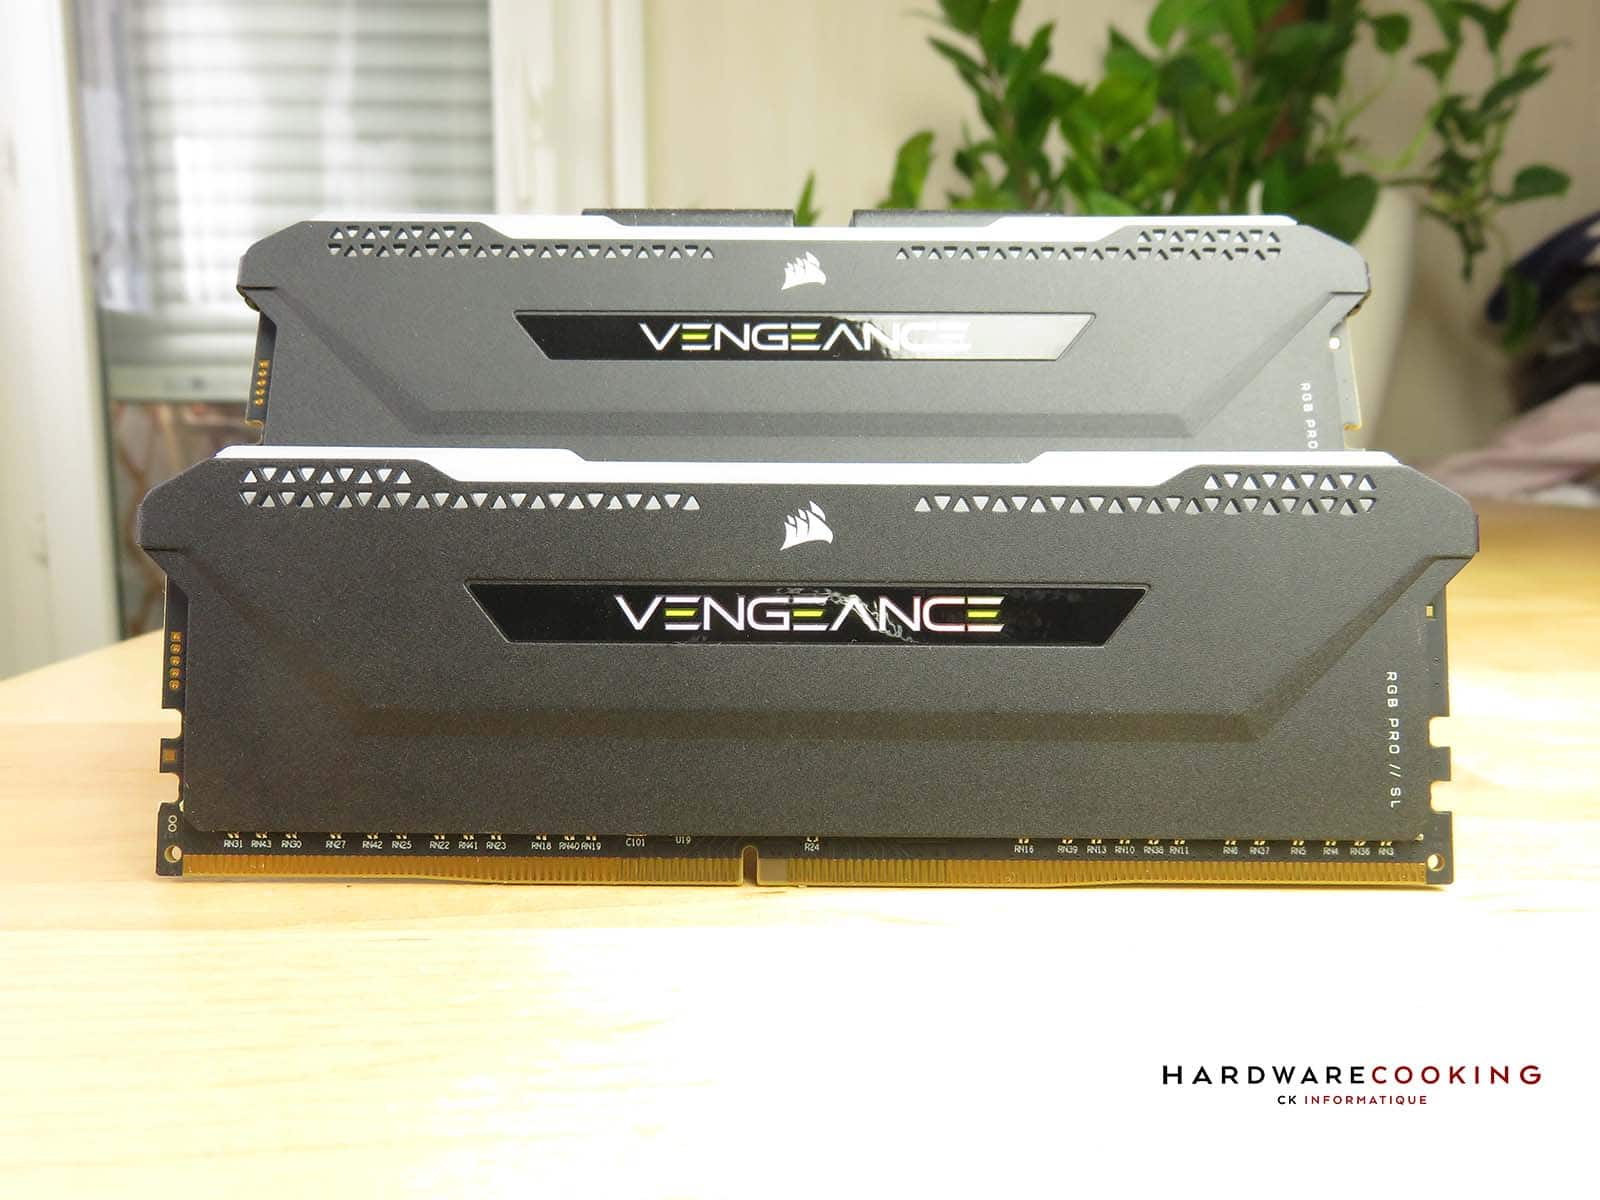 Corsair Vengeance RGB Pro SL 16 Go (2x8 Go) DDR4 3600 (PC4-28800